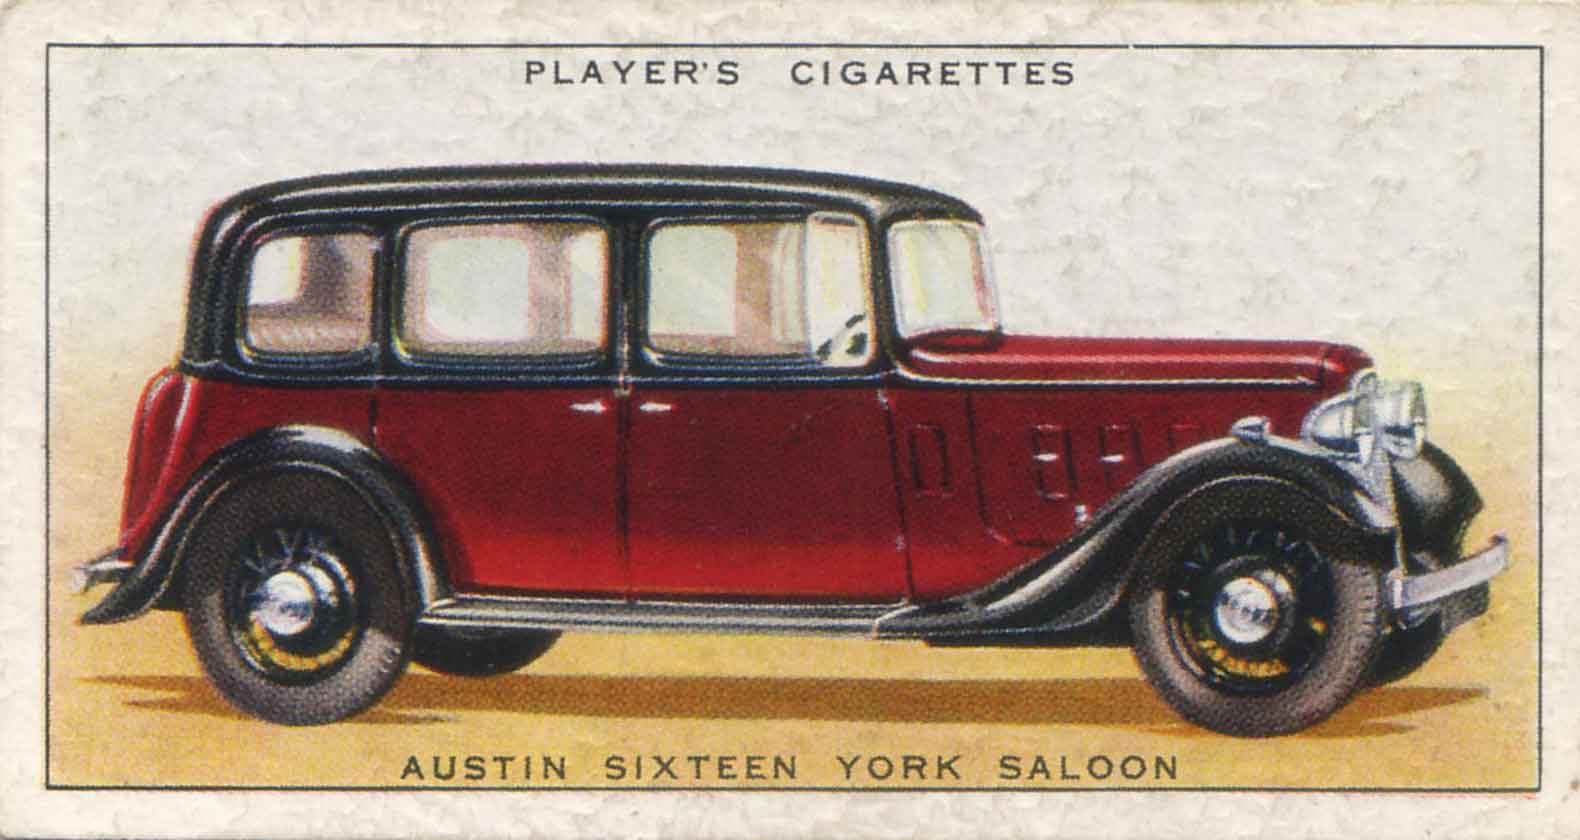 Austin Sixteen York. Cigarette card from 1937.